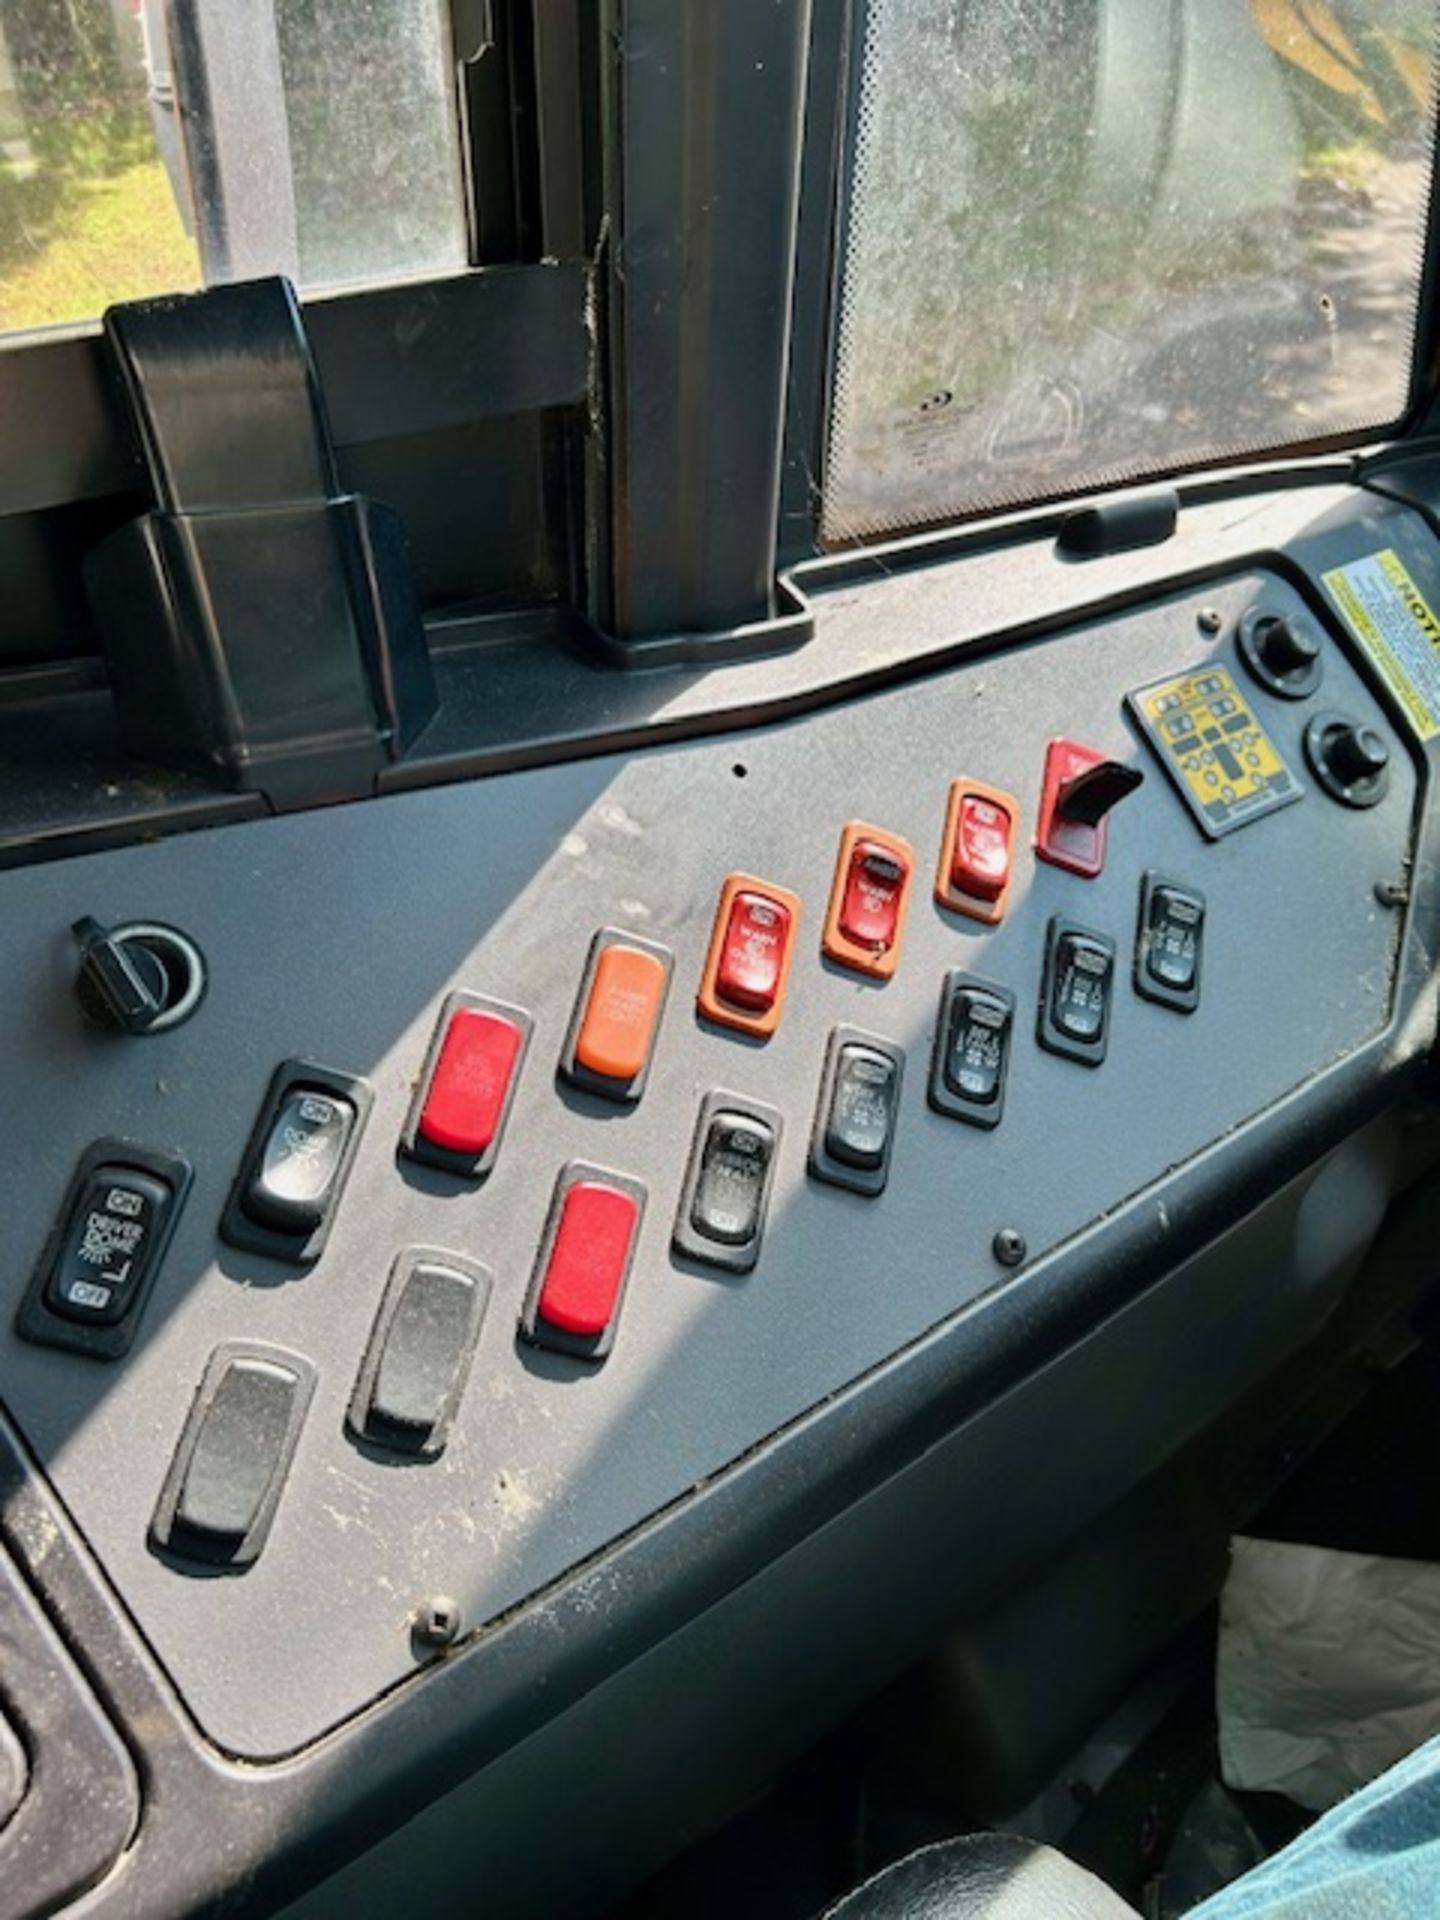 2018 Thomas 54 Seat School Bus - Image 10 of 15